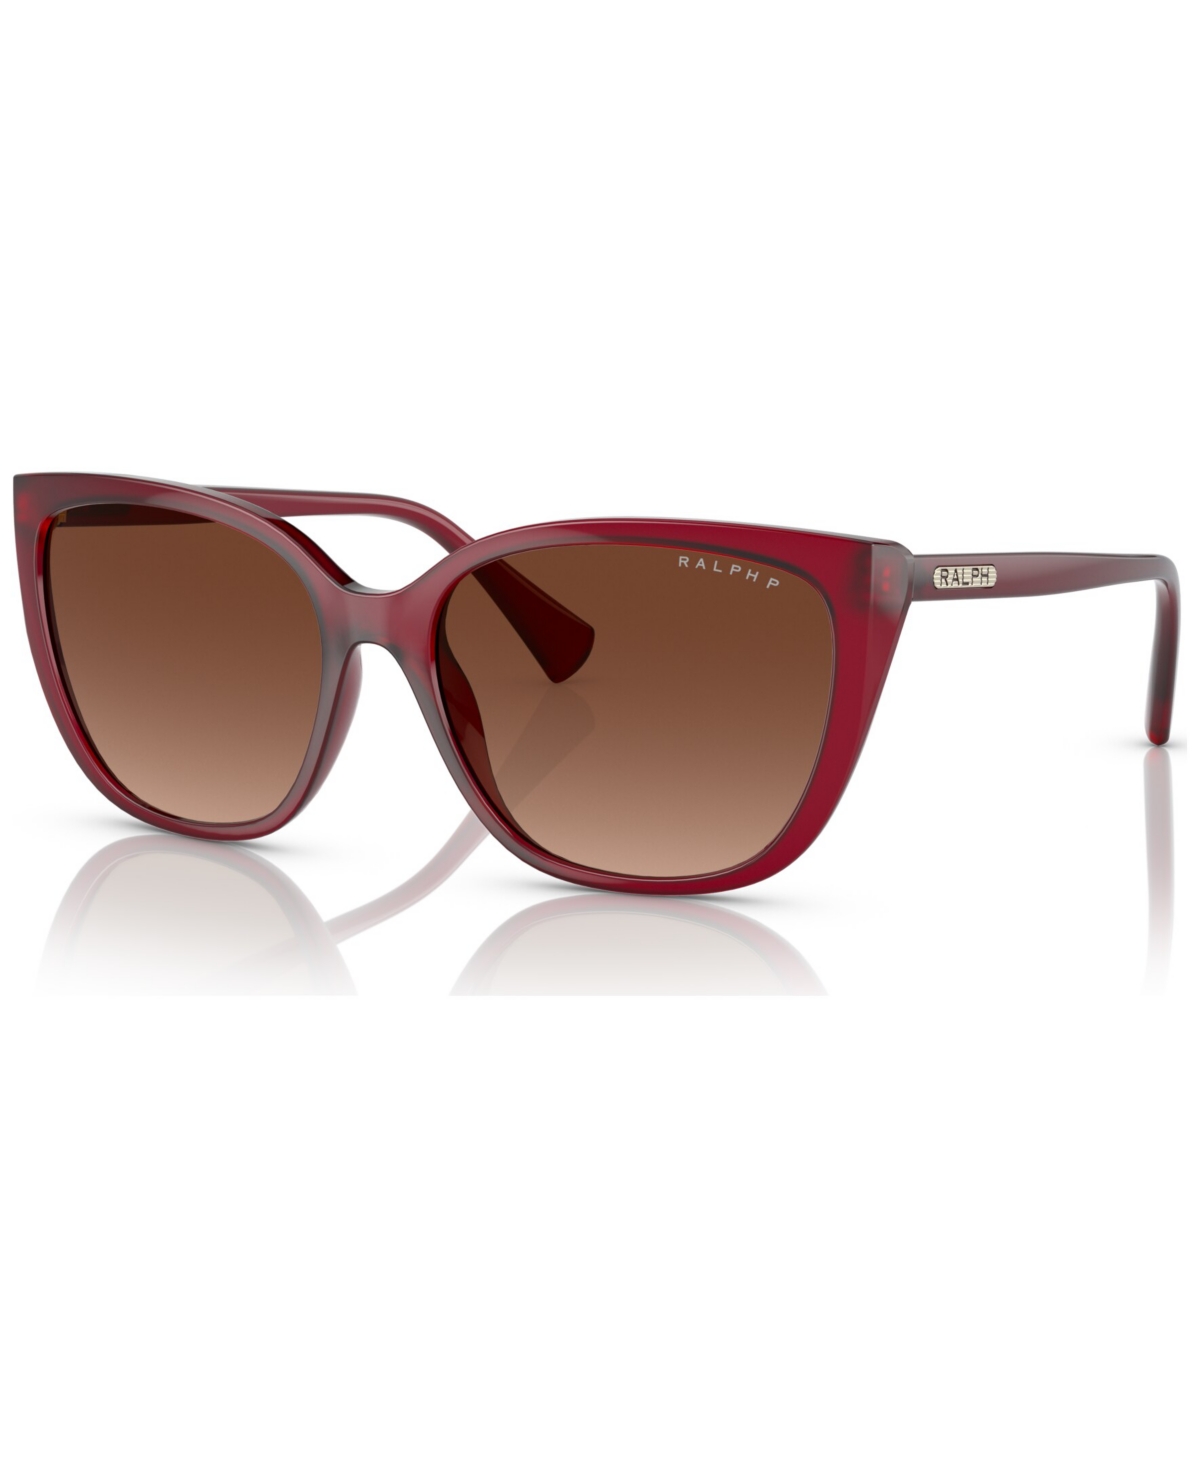 Women's Polarized Sunglasses, RA527456-yp - Transparent Bordeaux